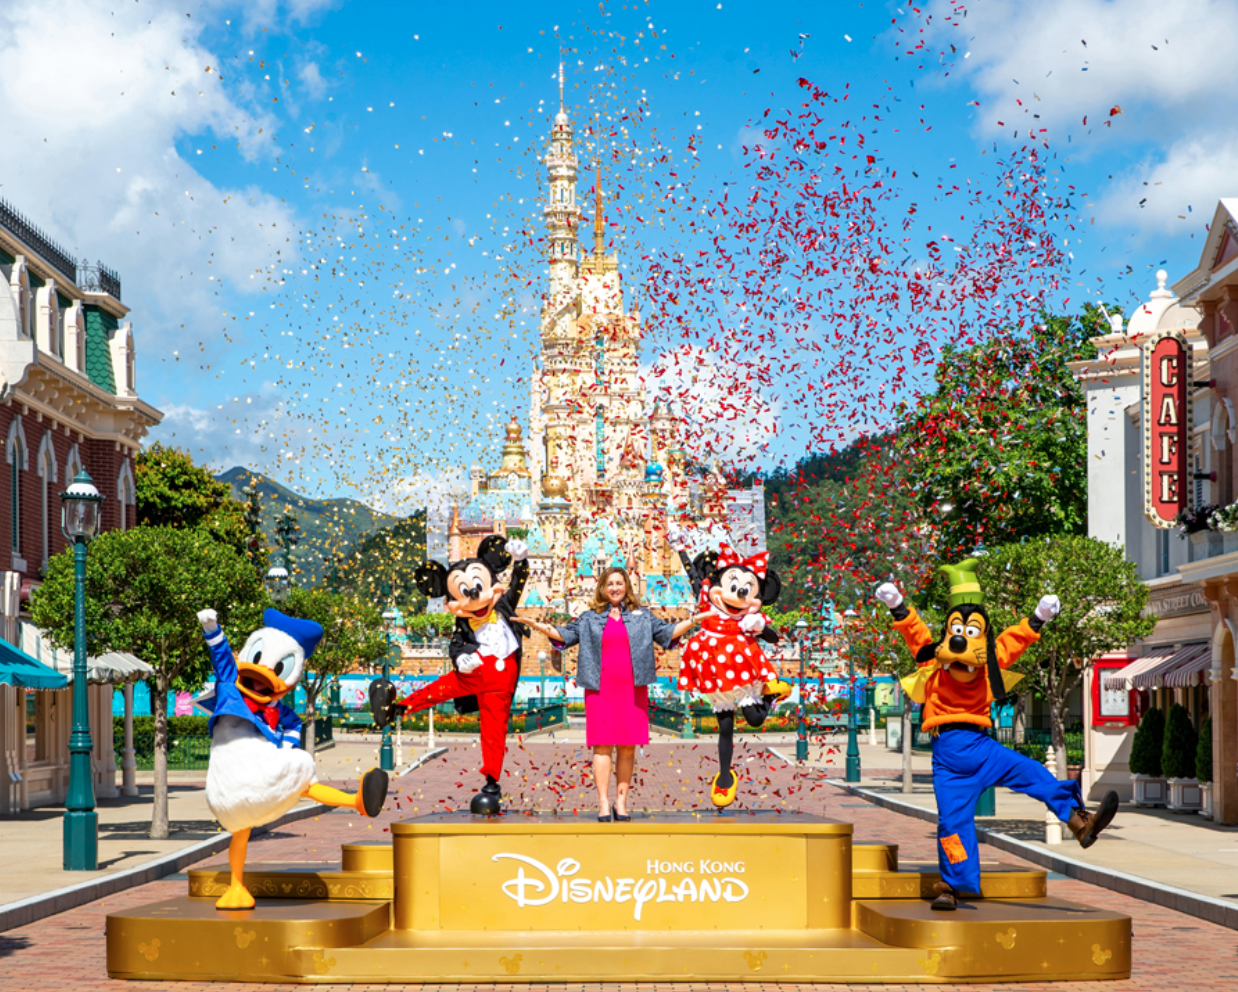 NEWS: Hong Kong Disneyland Announces Reopening Date